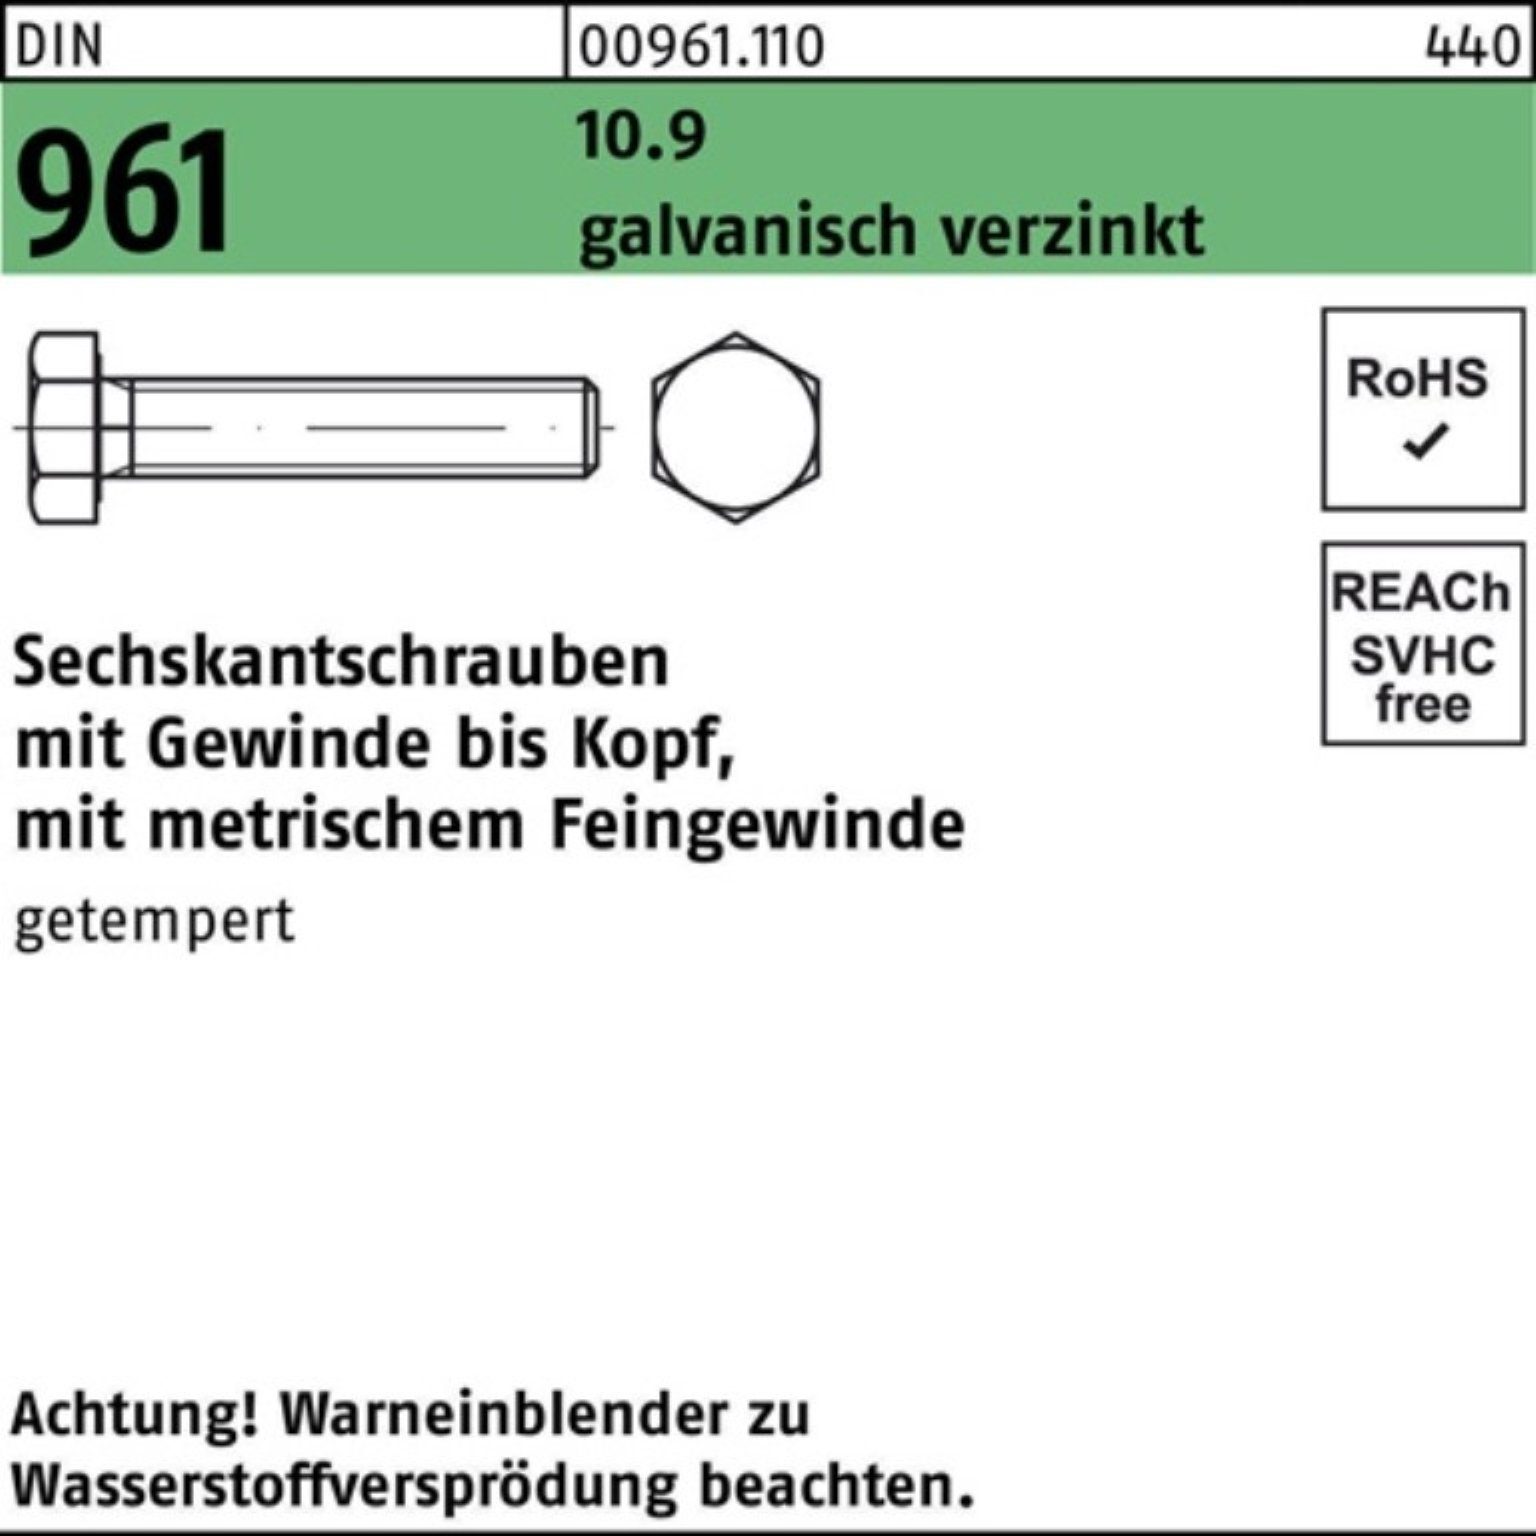 Sechskantschraube Sechskantschraube Reyher M8x1x VG 200 200er DIN 10.9 Pack 961 galv.verz. S 20